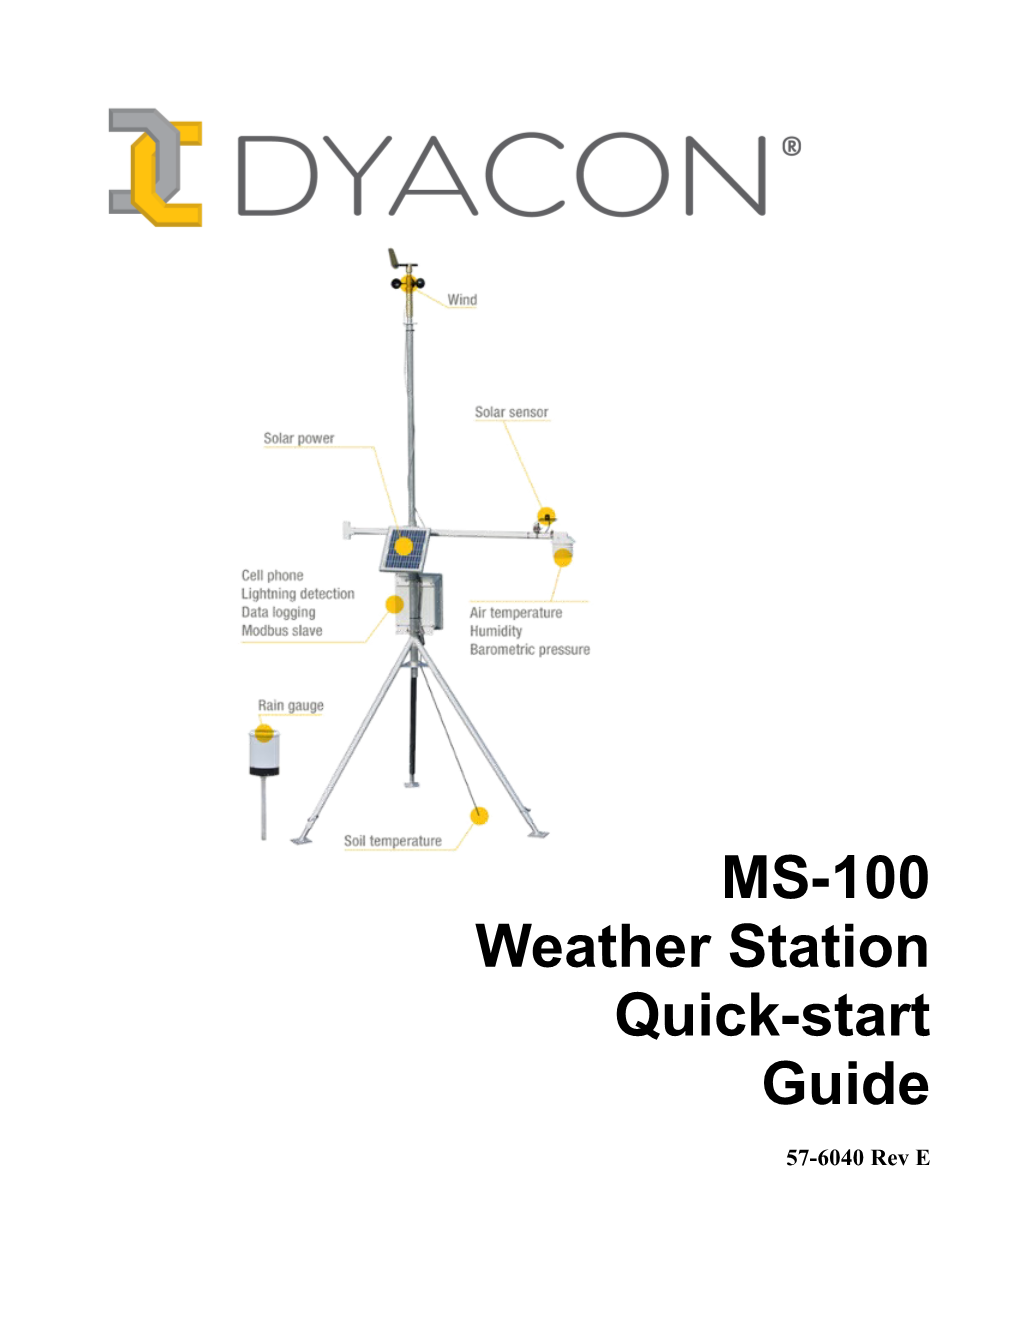 DYACON Quick-Start Guide